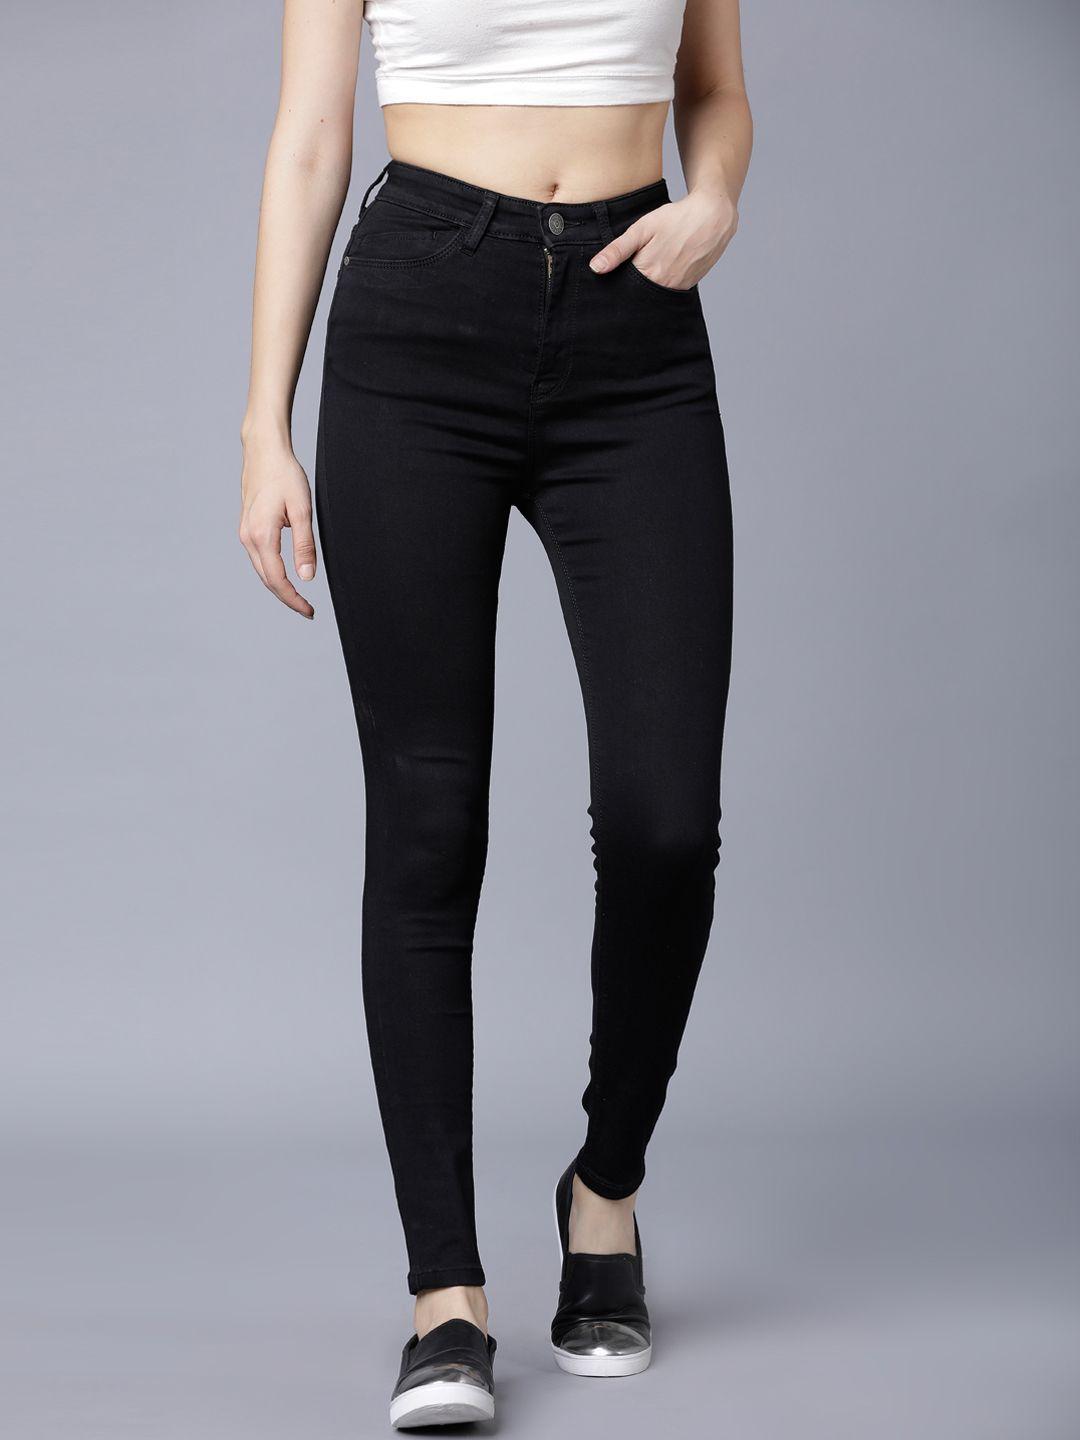 tokyo talkies women black super skinny fit mid-rise clean look stretchable jeans